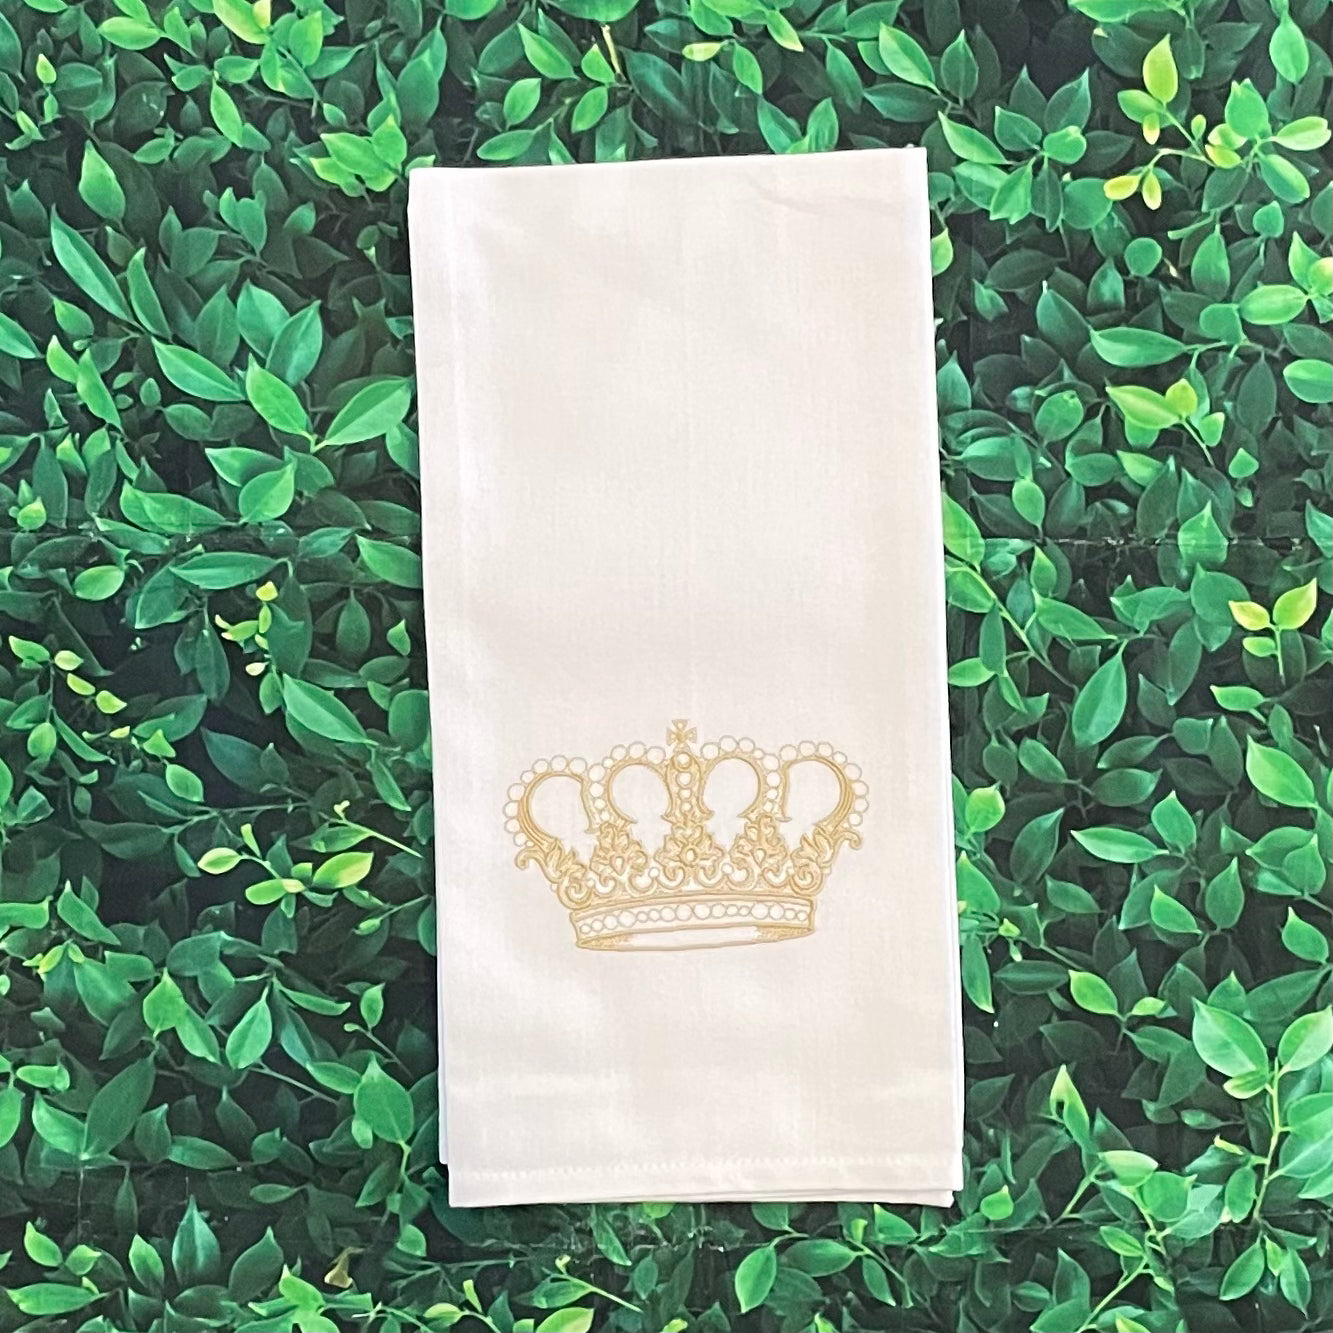 Herend Gold Crown Flour Sack Towel